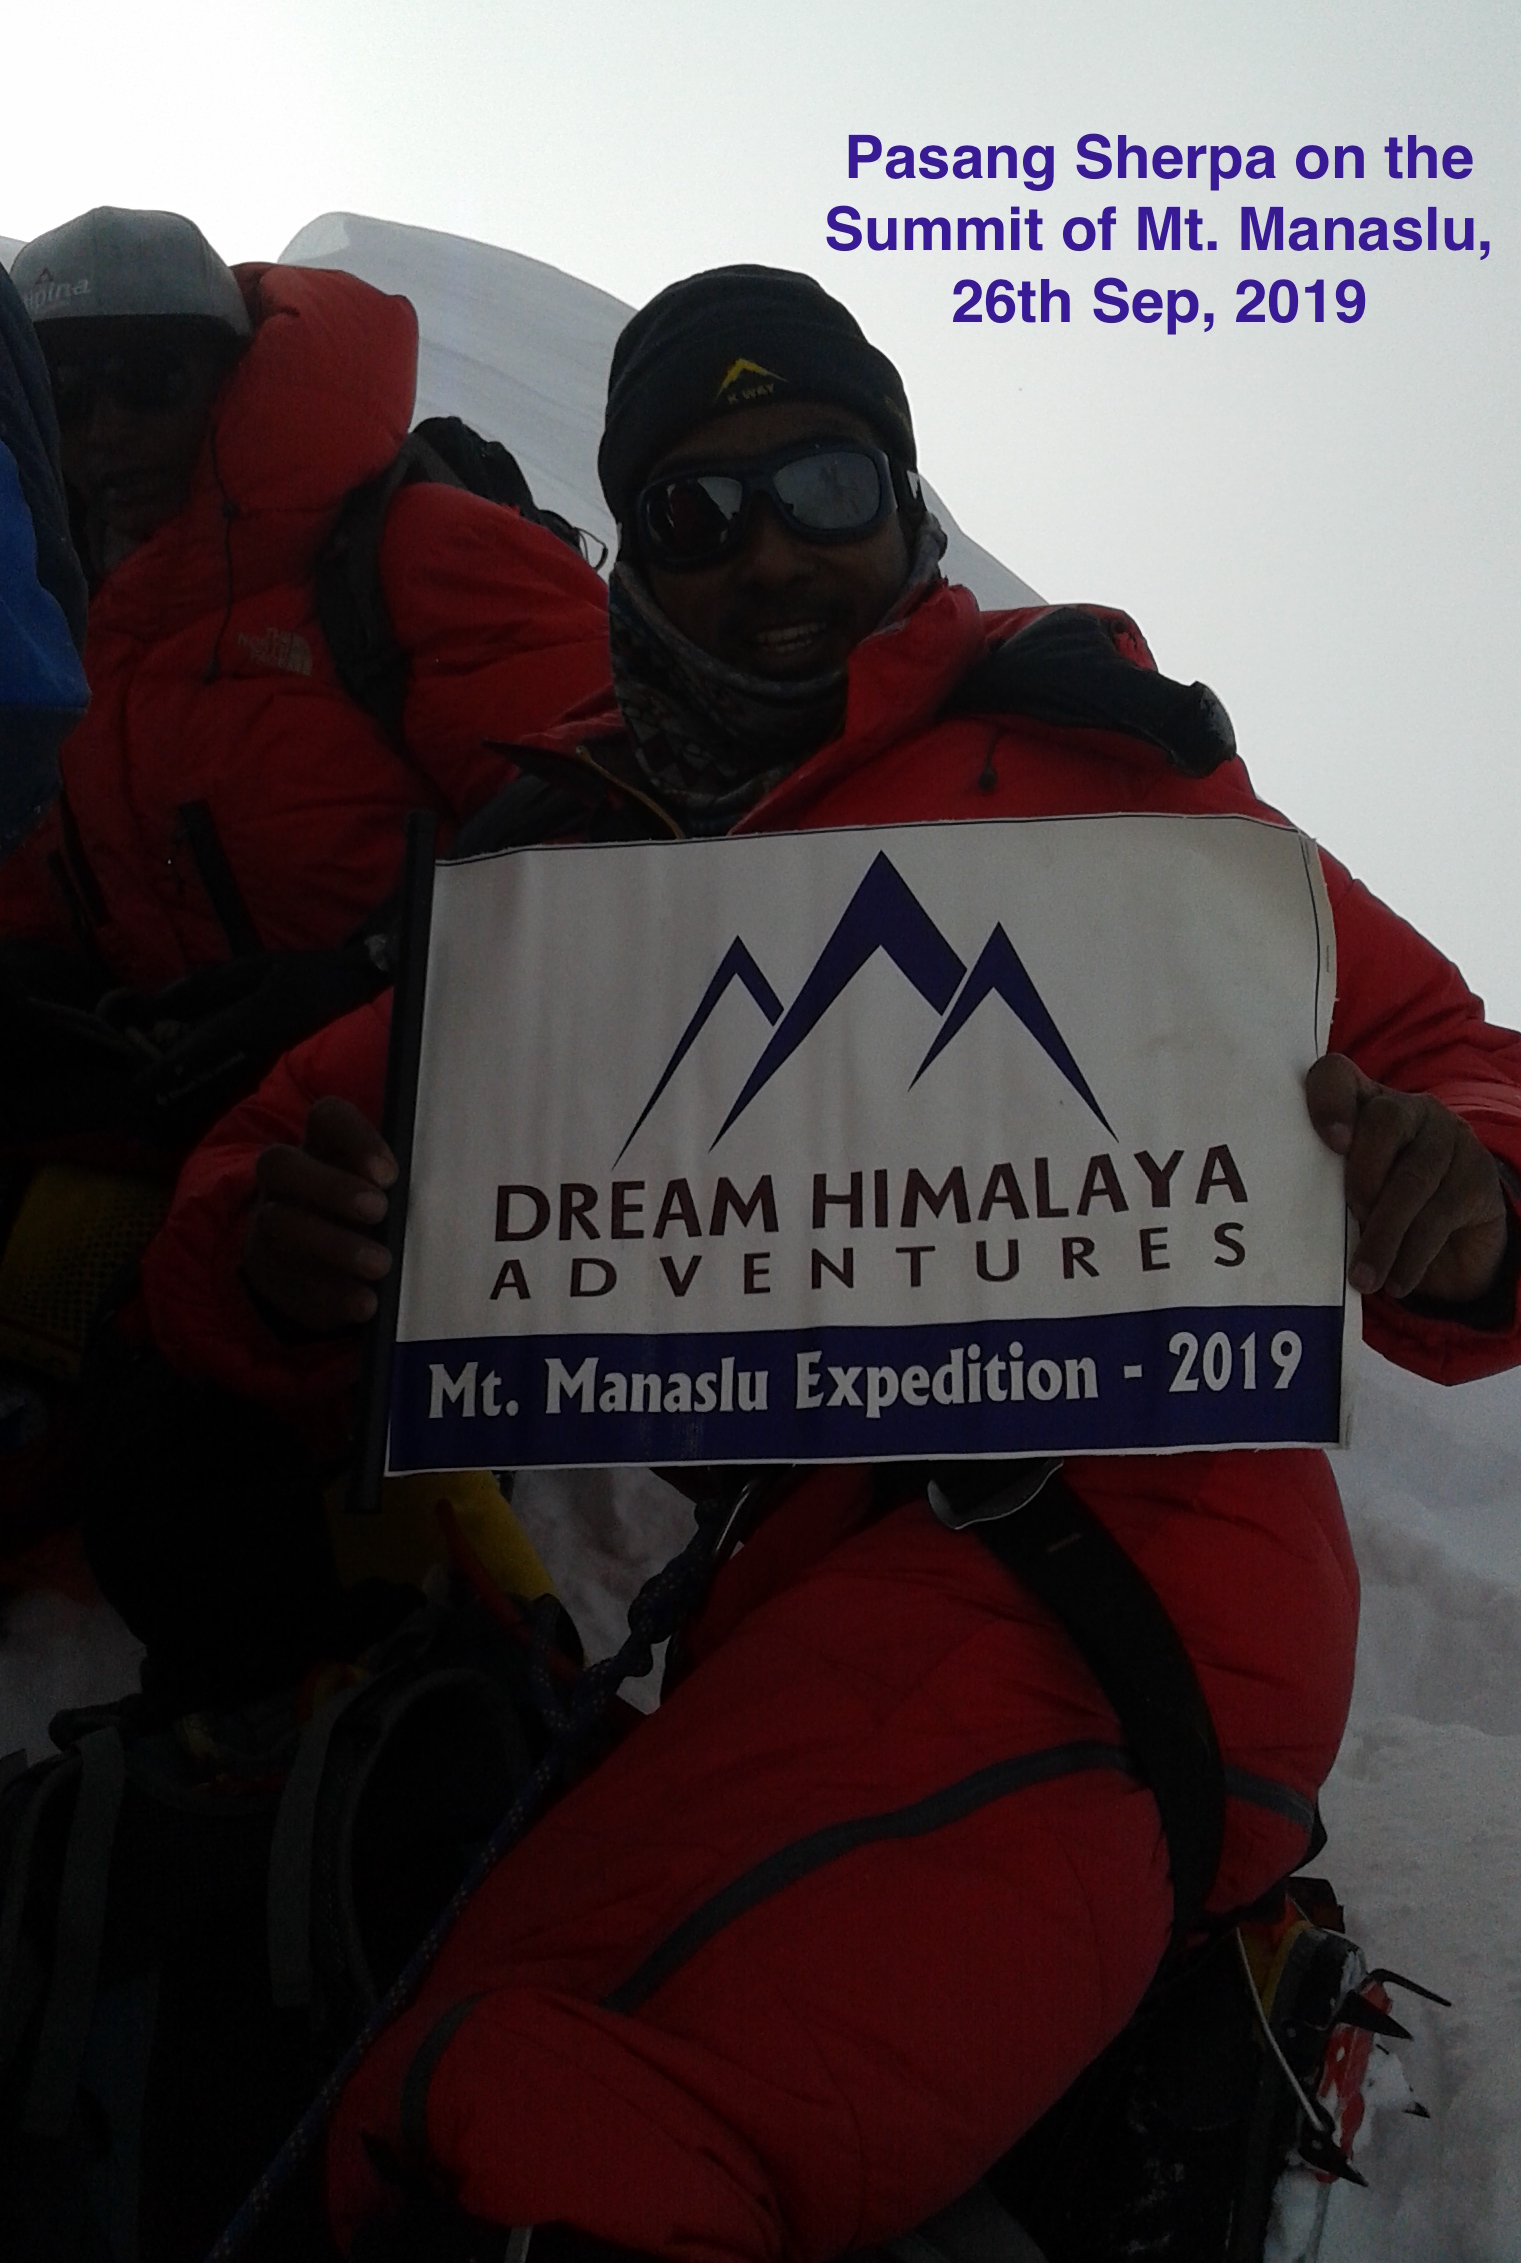 Pasang Sherpa on the summit of Mt Manaslu - 2019